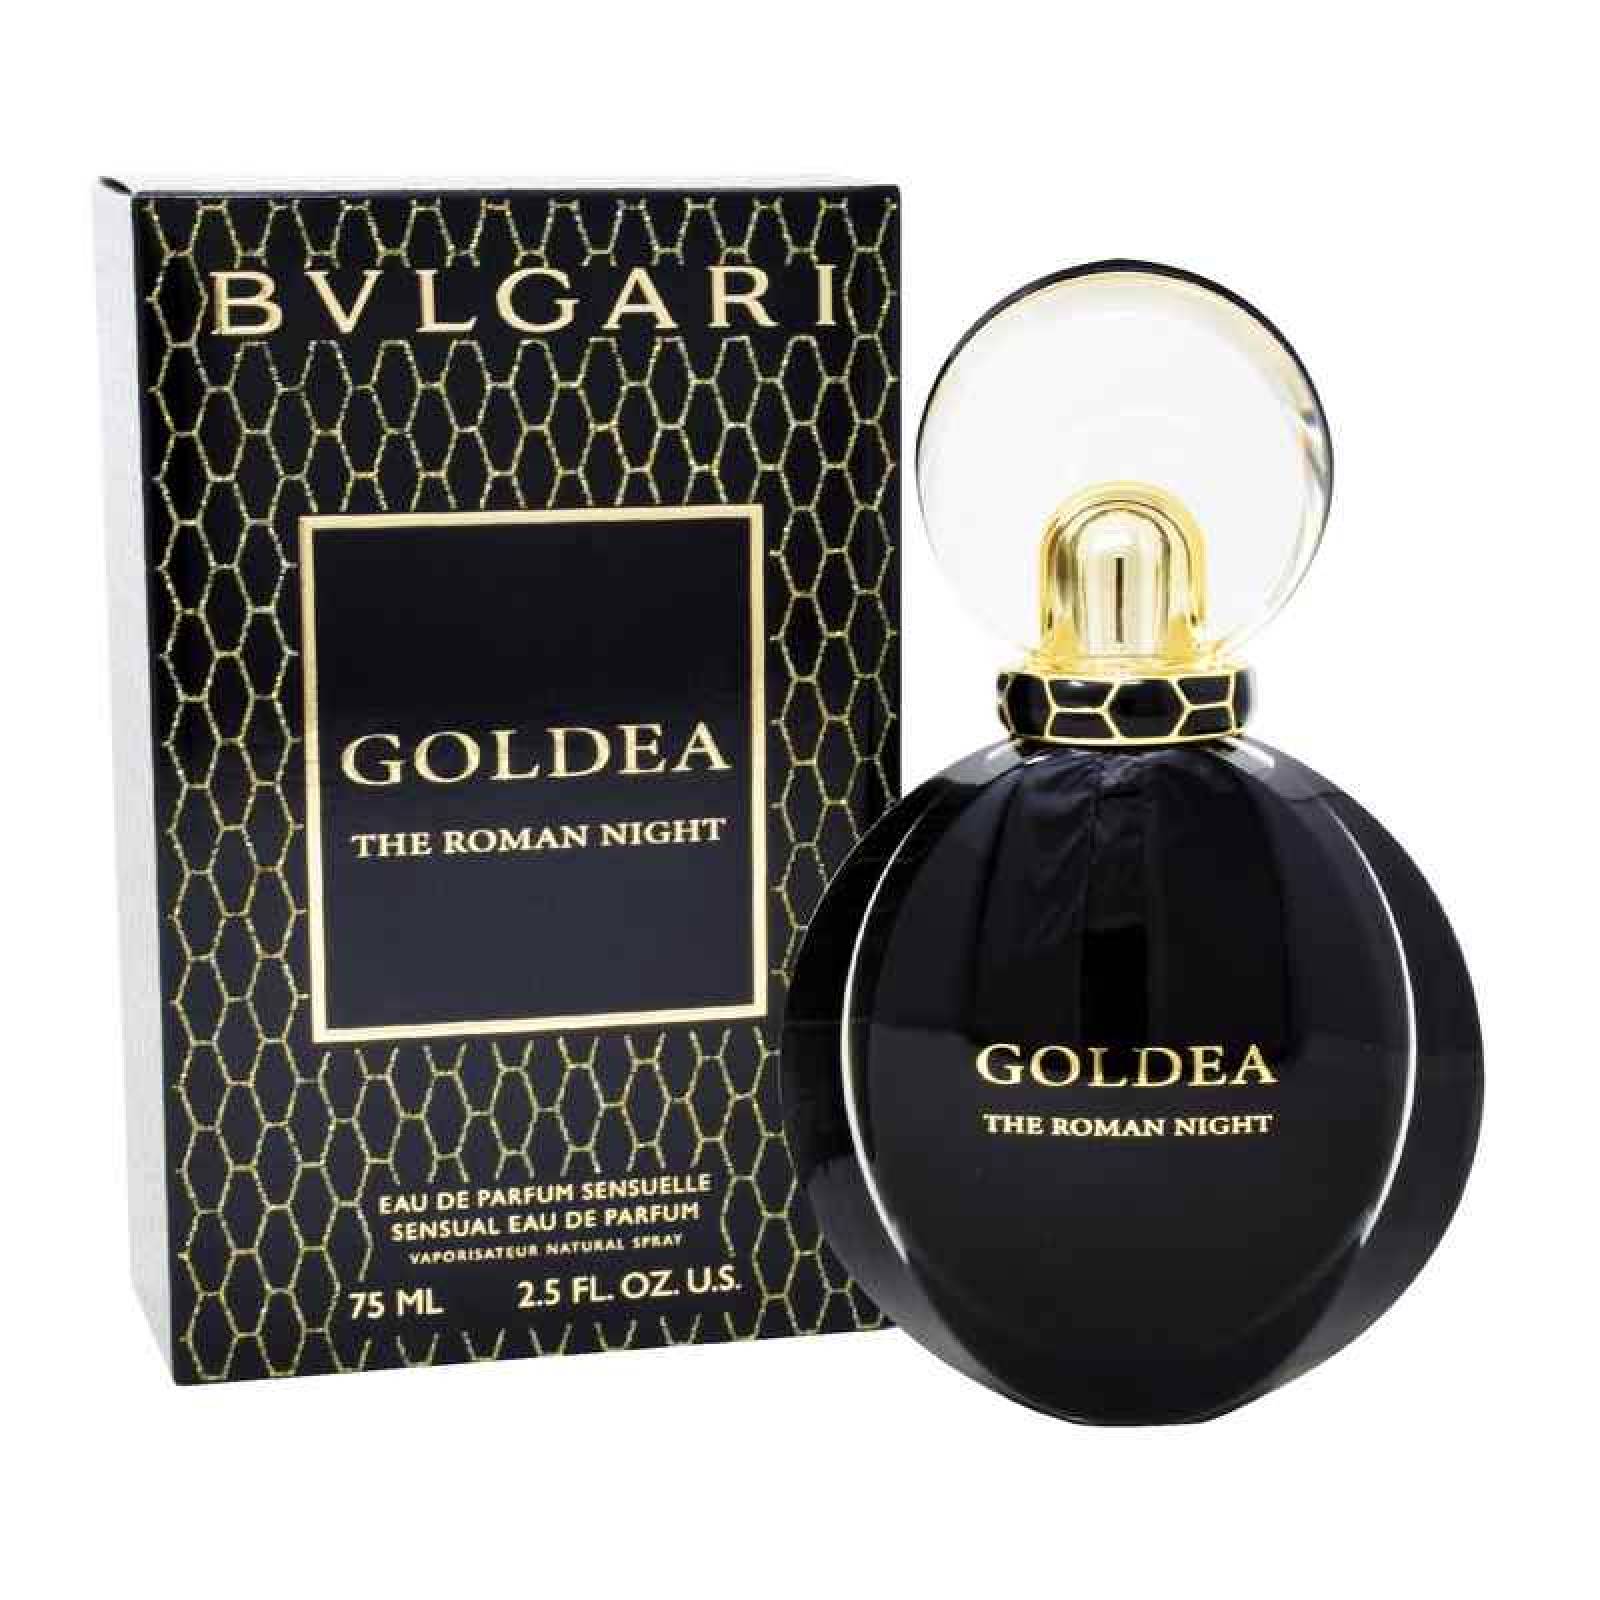 Goldea The Roman Night 75 ml Eau de Parfum de Bvlgari